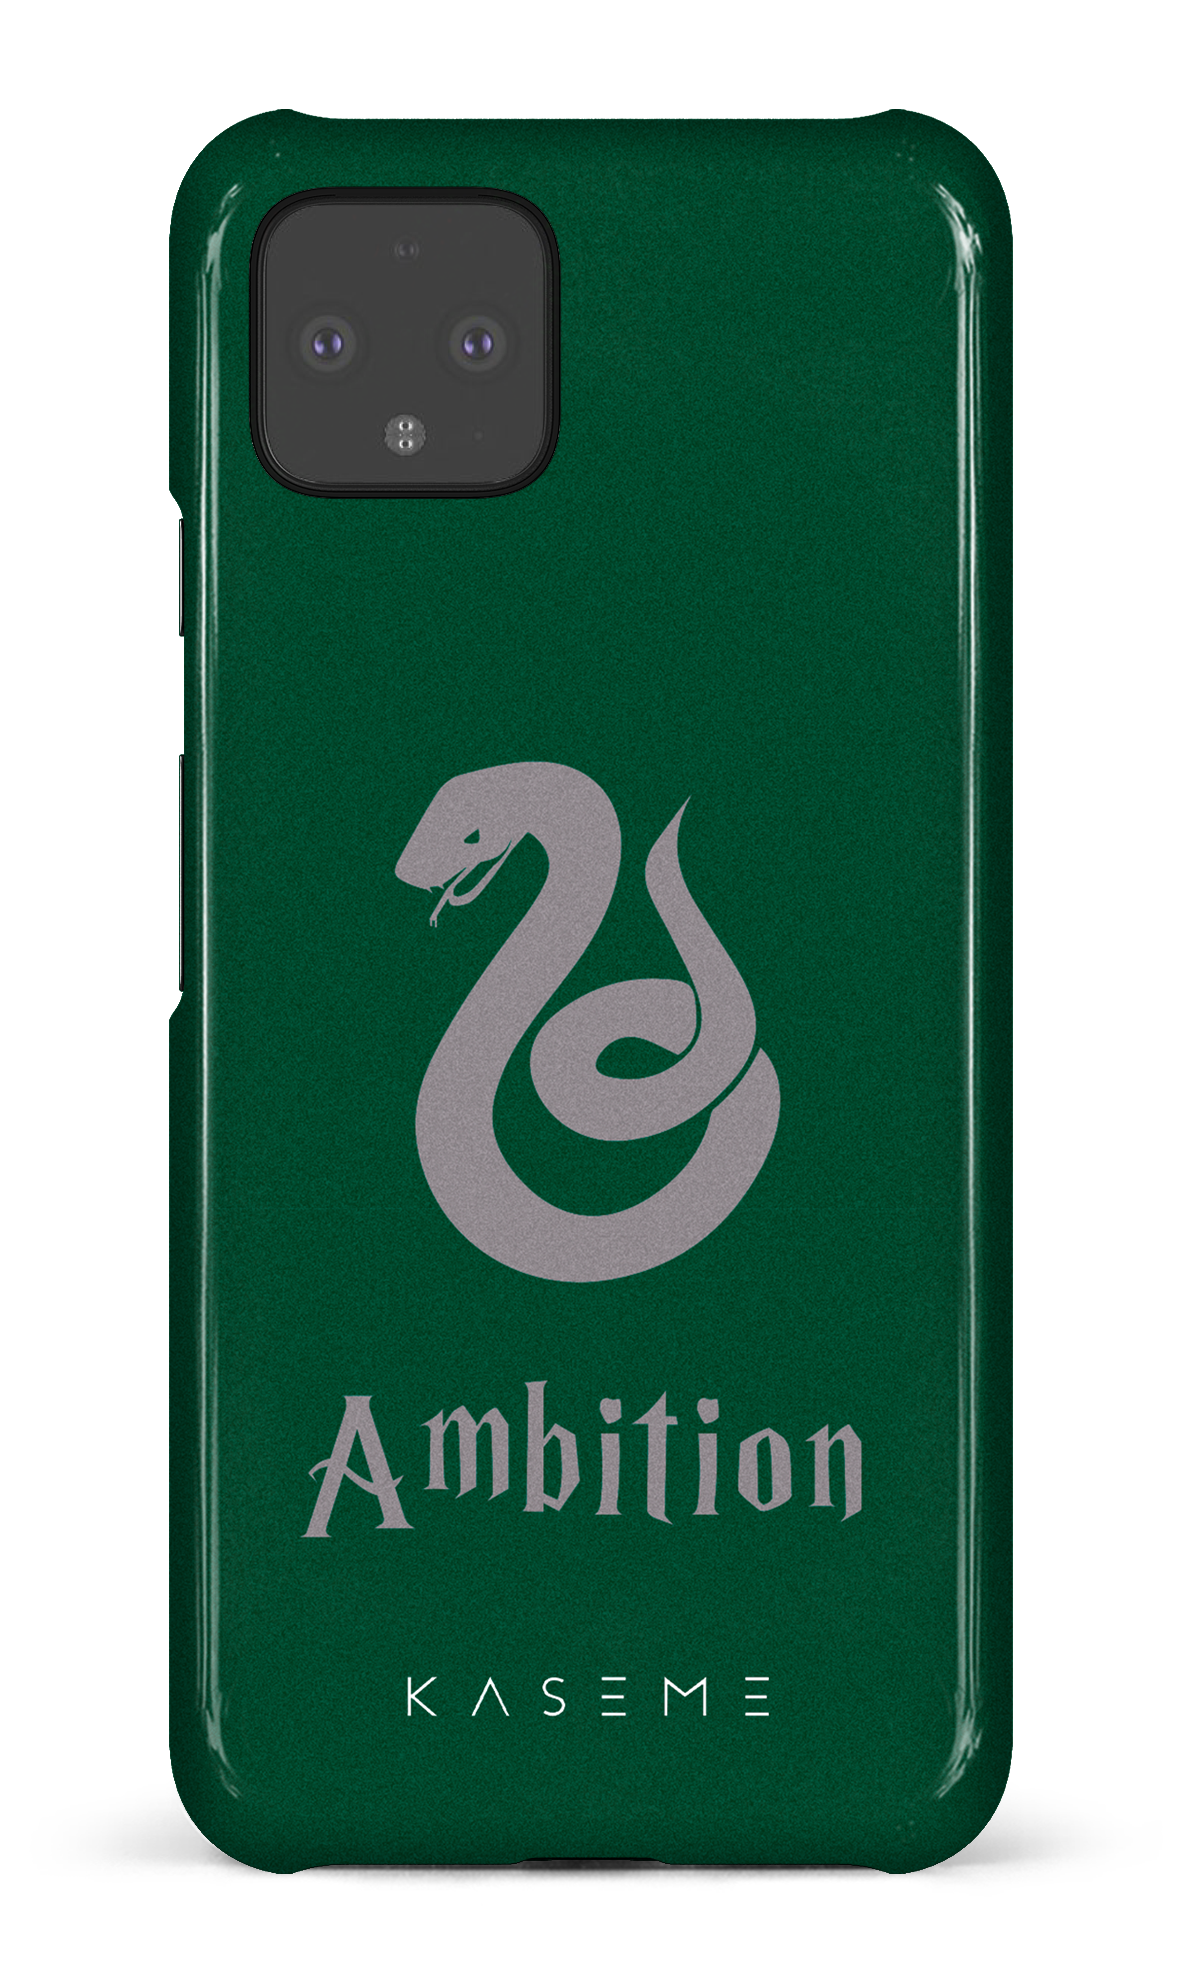 Ambition - Google Pixel 4